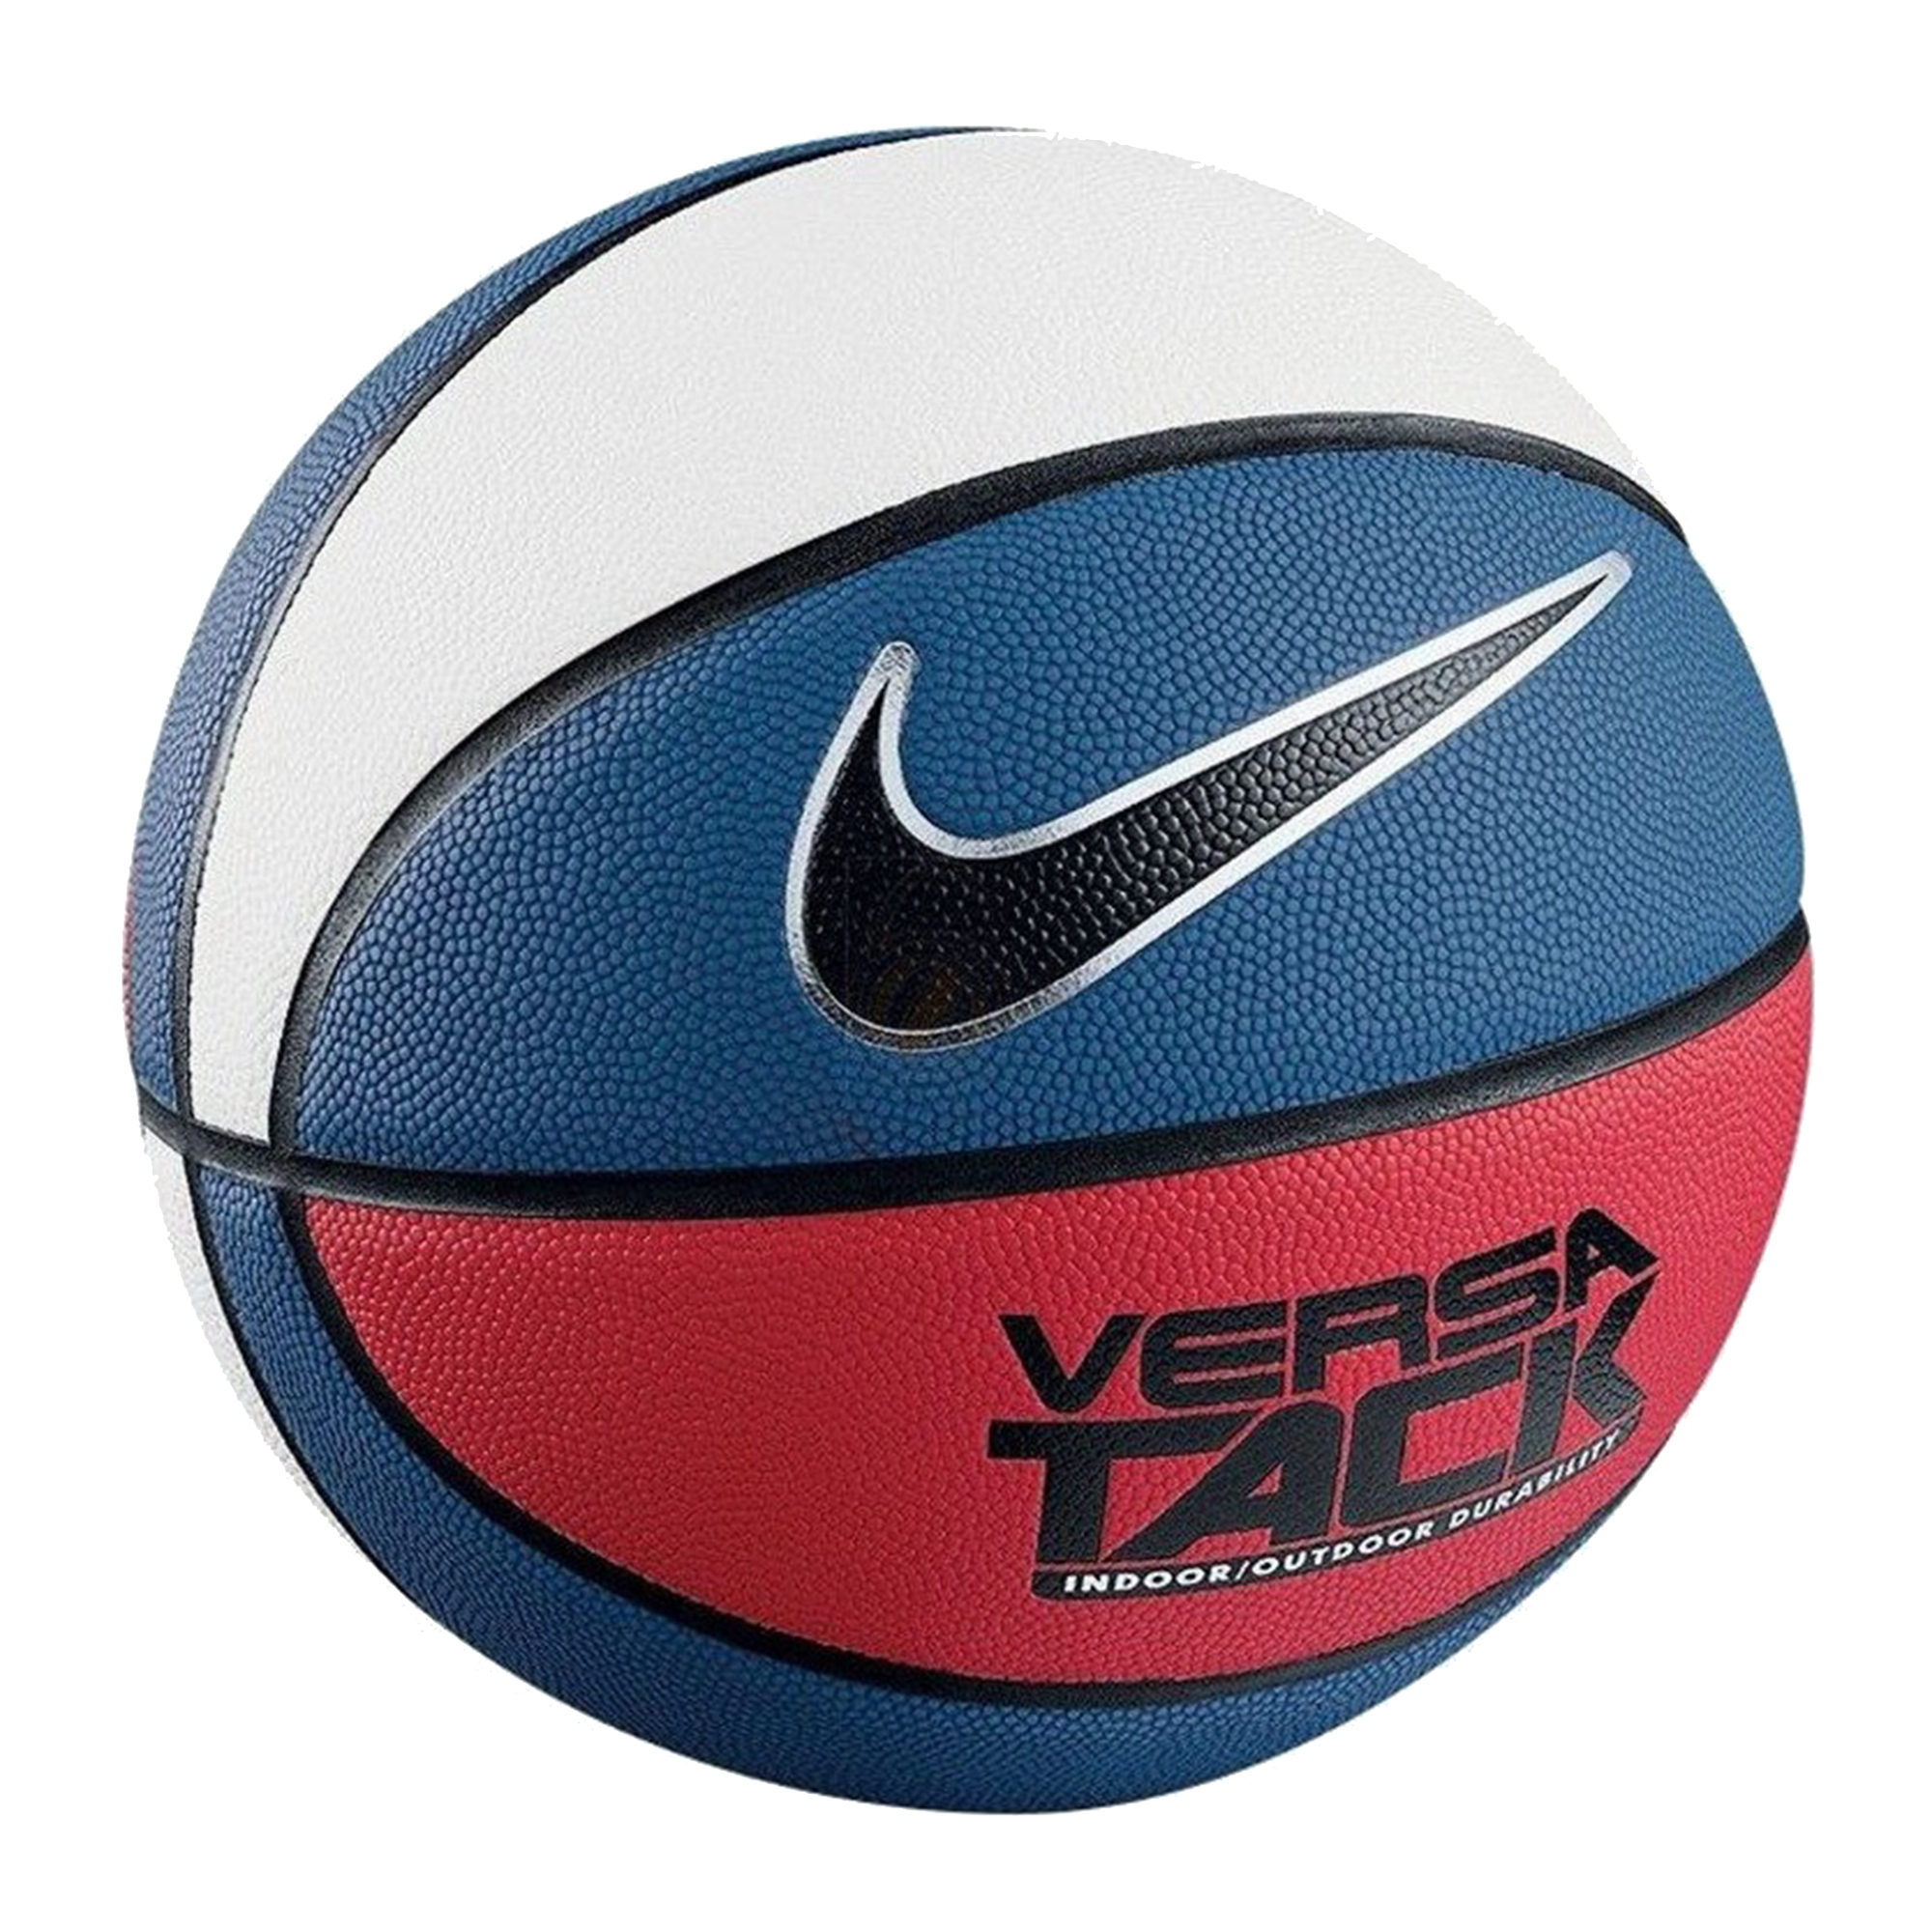 Баскетбольный мяч Nike Versa Tack-7 - картинка